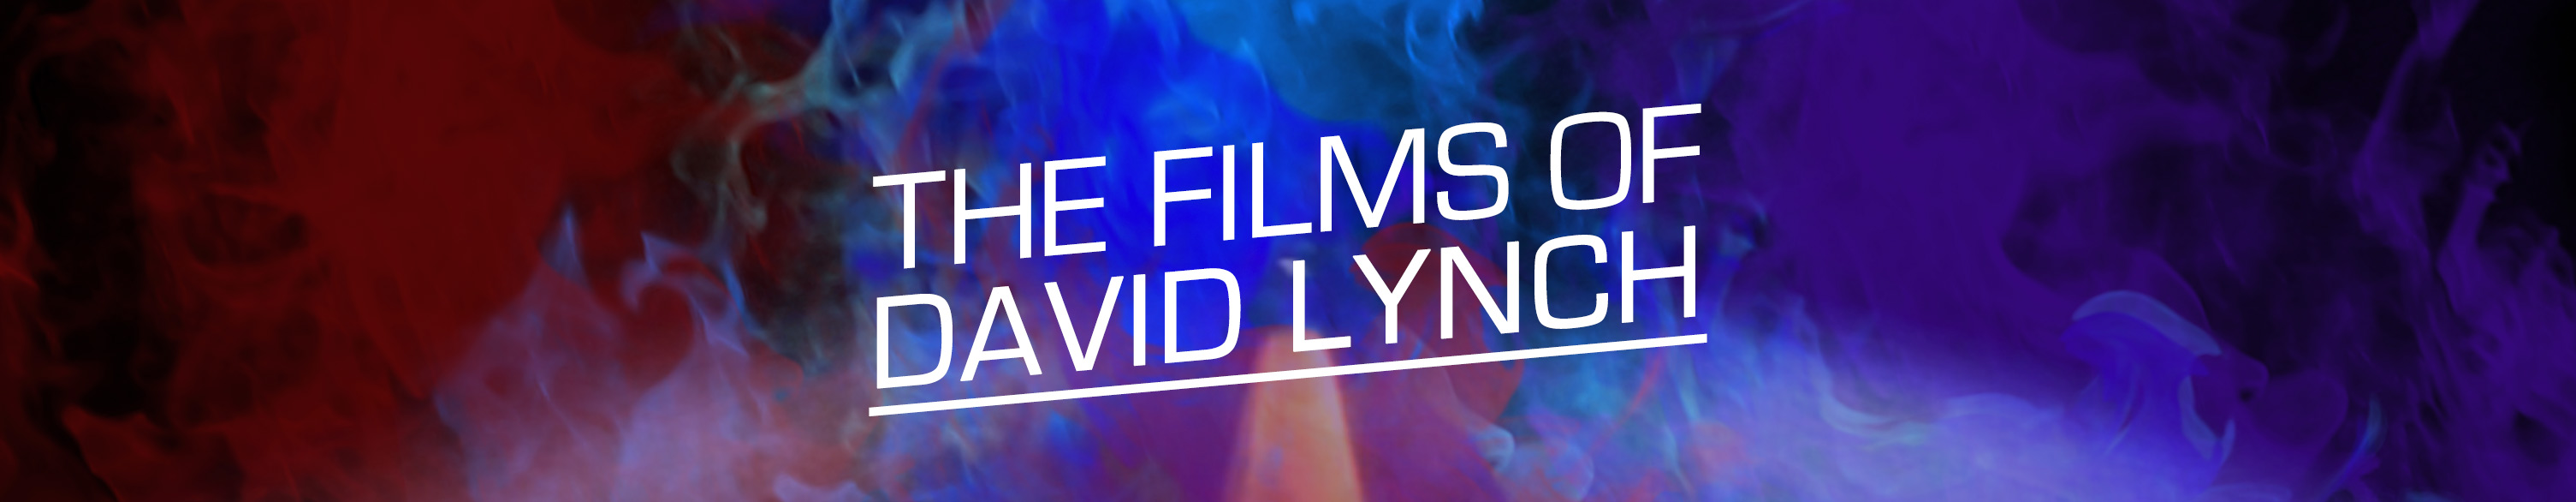 THE FILMS OF DAVID LYNCH